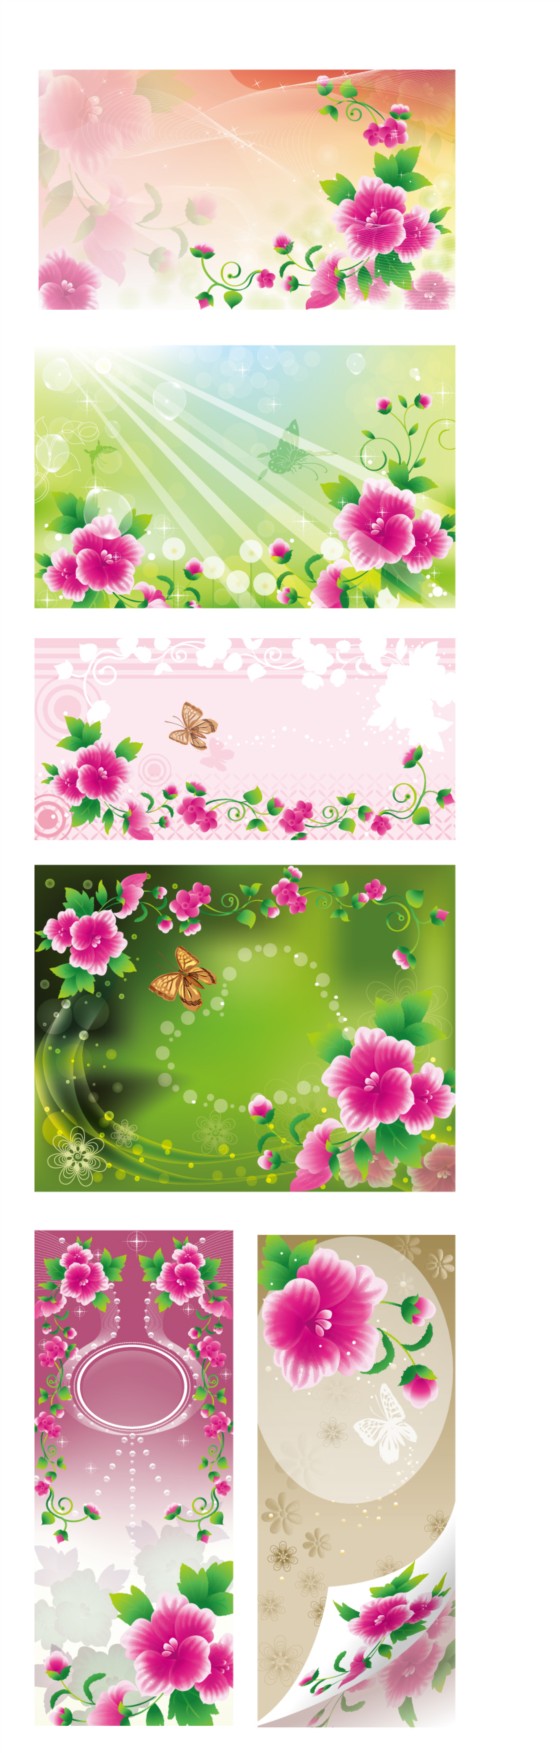 Plant flower background vector